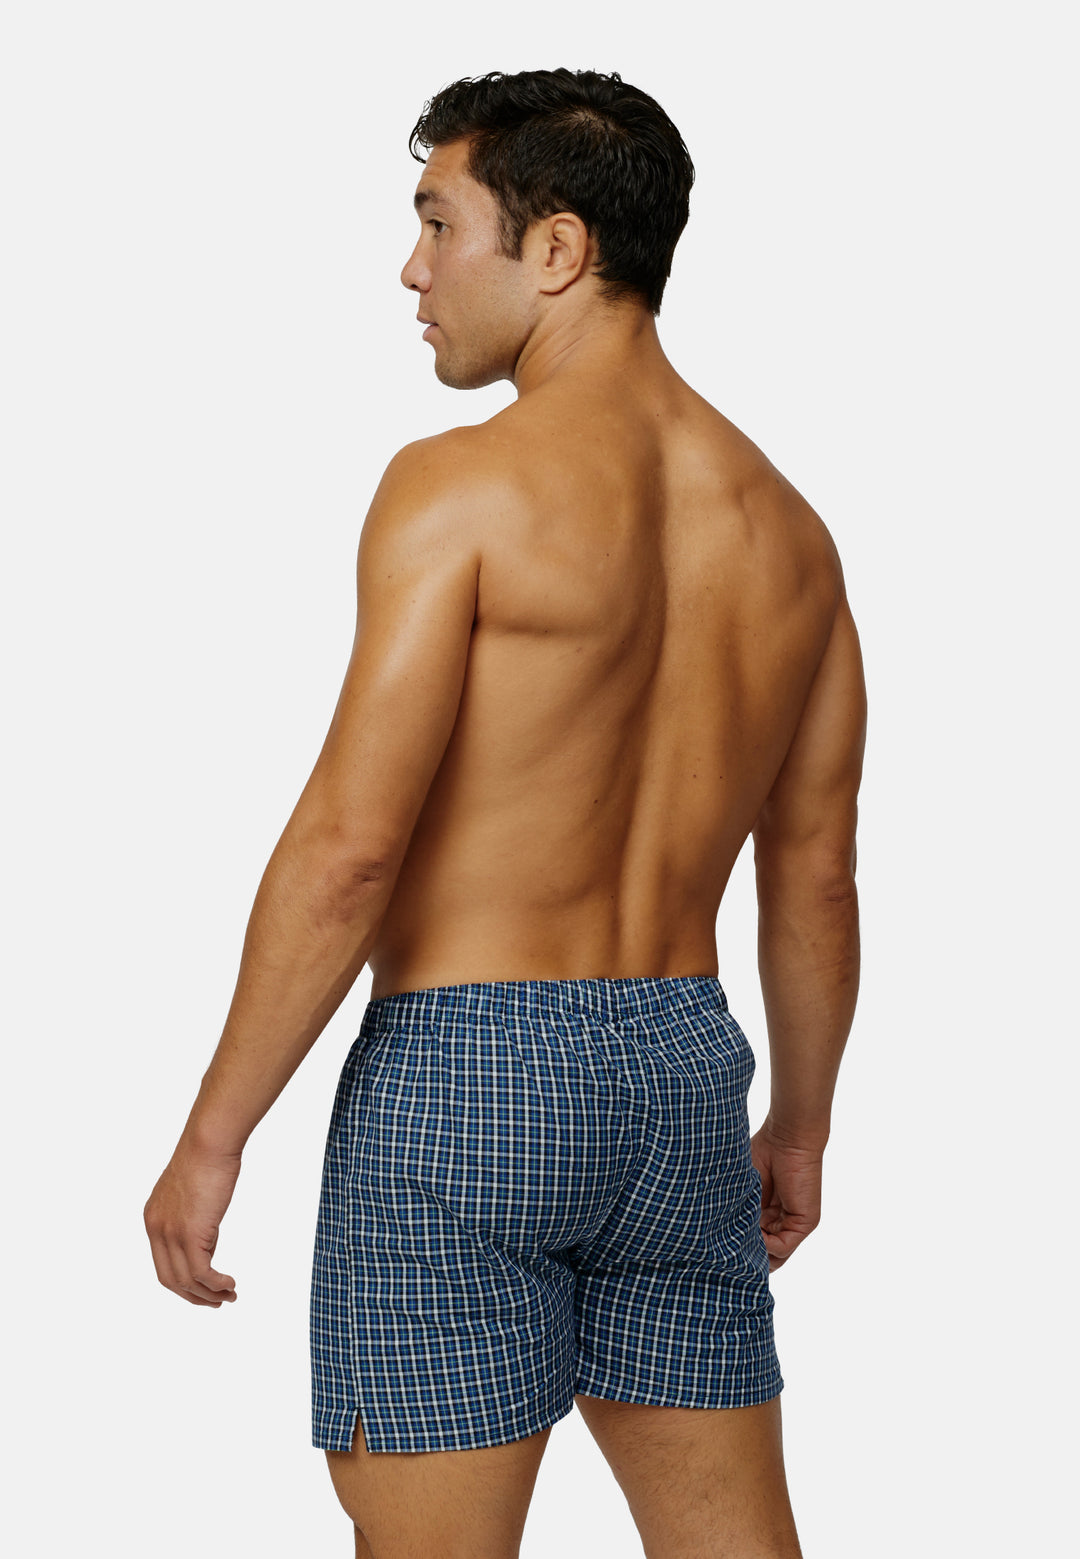 10x Men's Woven Boxers Underwear 100% Cotton Boxer Shorts Underwear For Men, Shop Today. Get it Tomorrow!